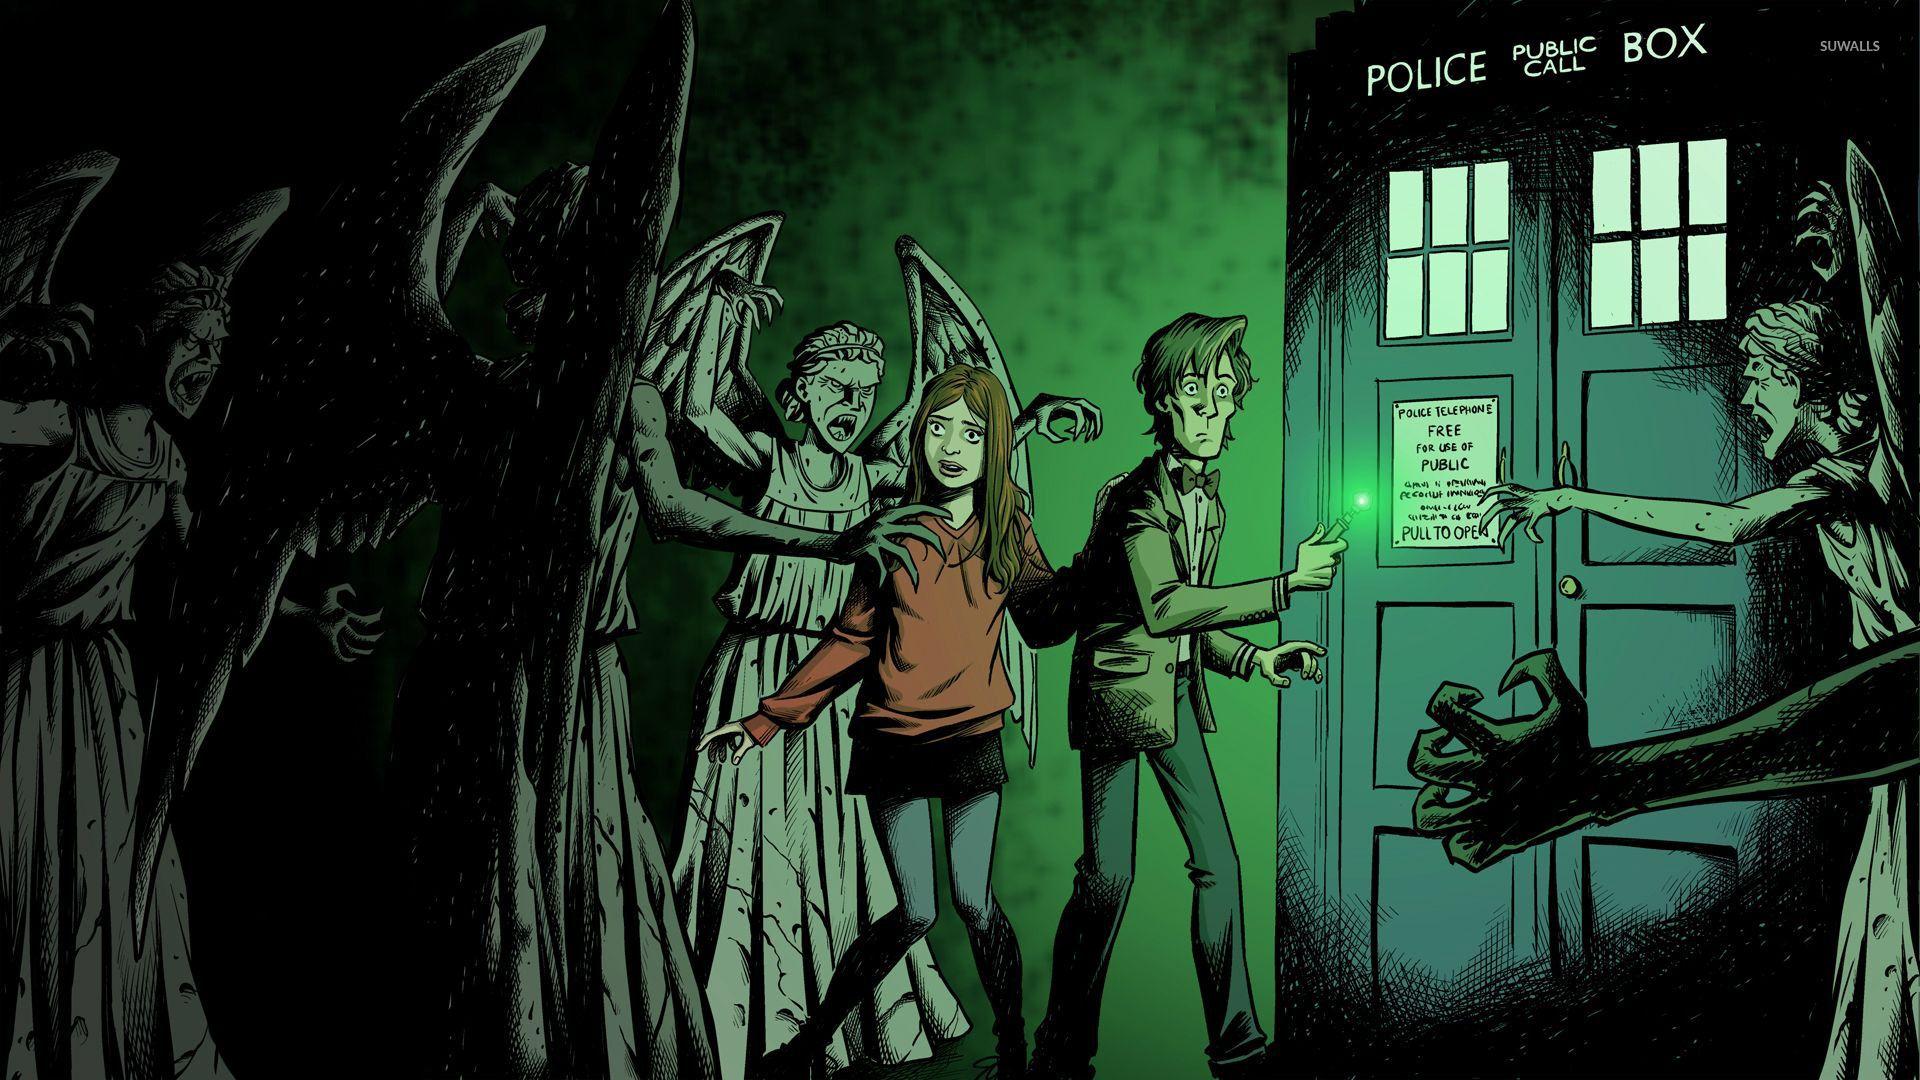 Doctor Who [4] wallpaper Show wallpaper